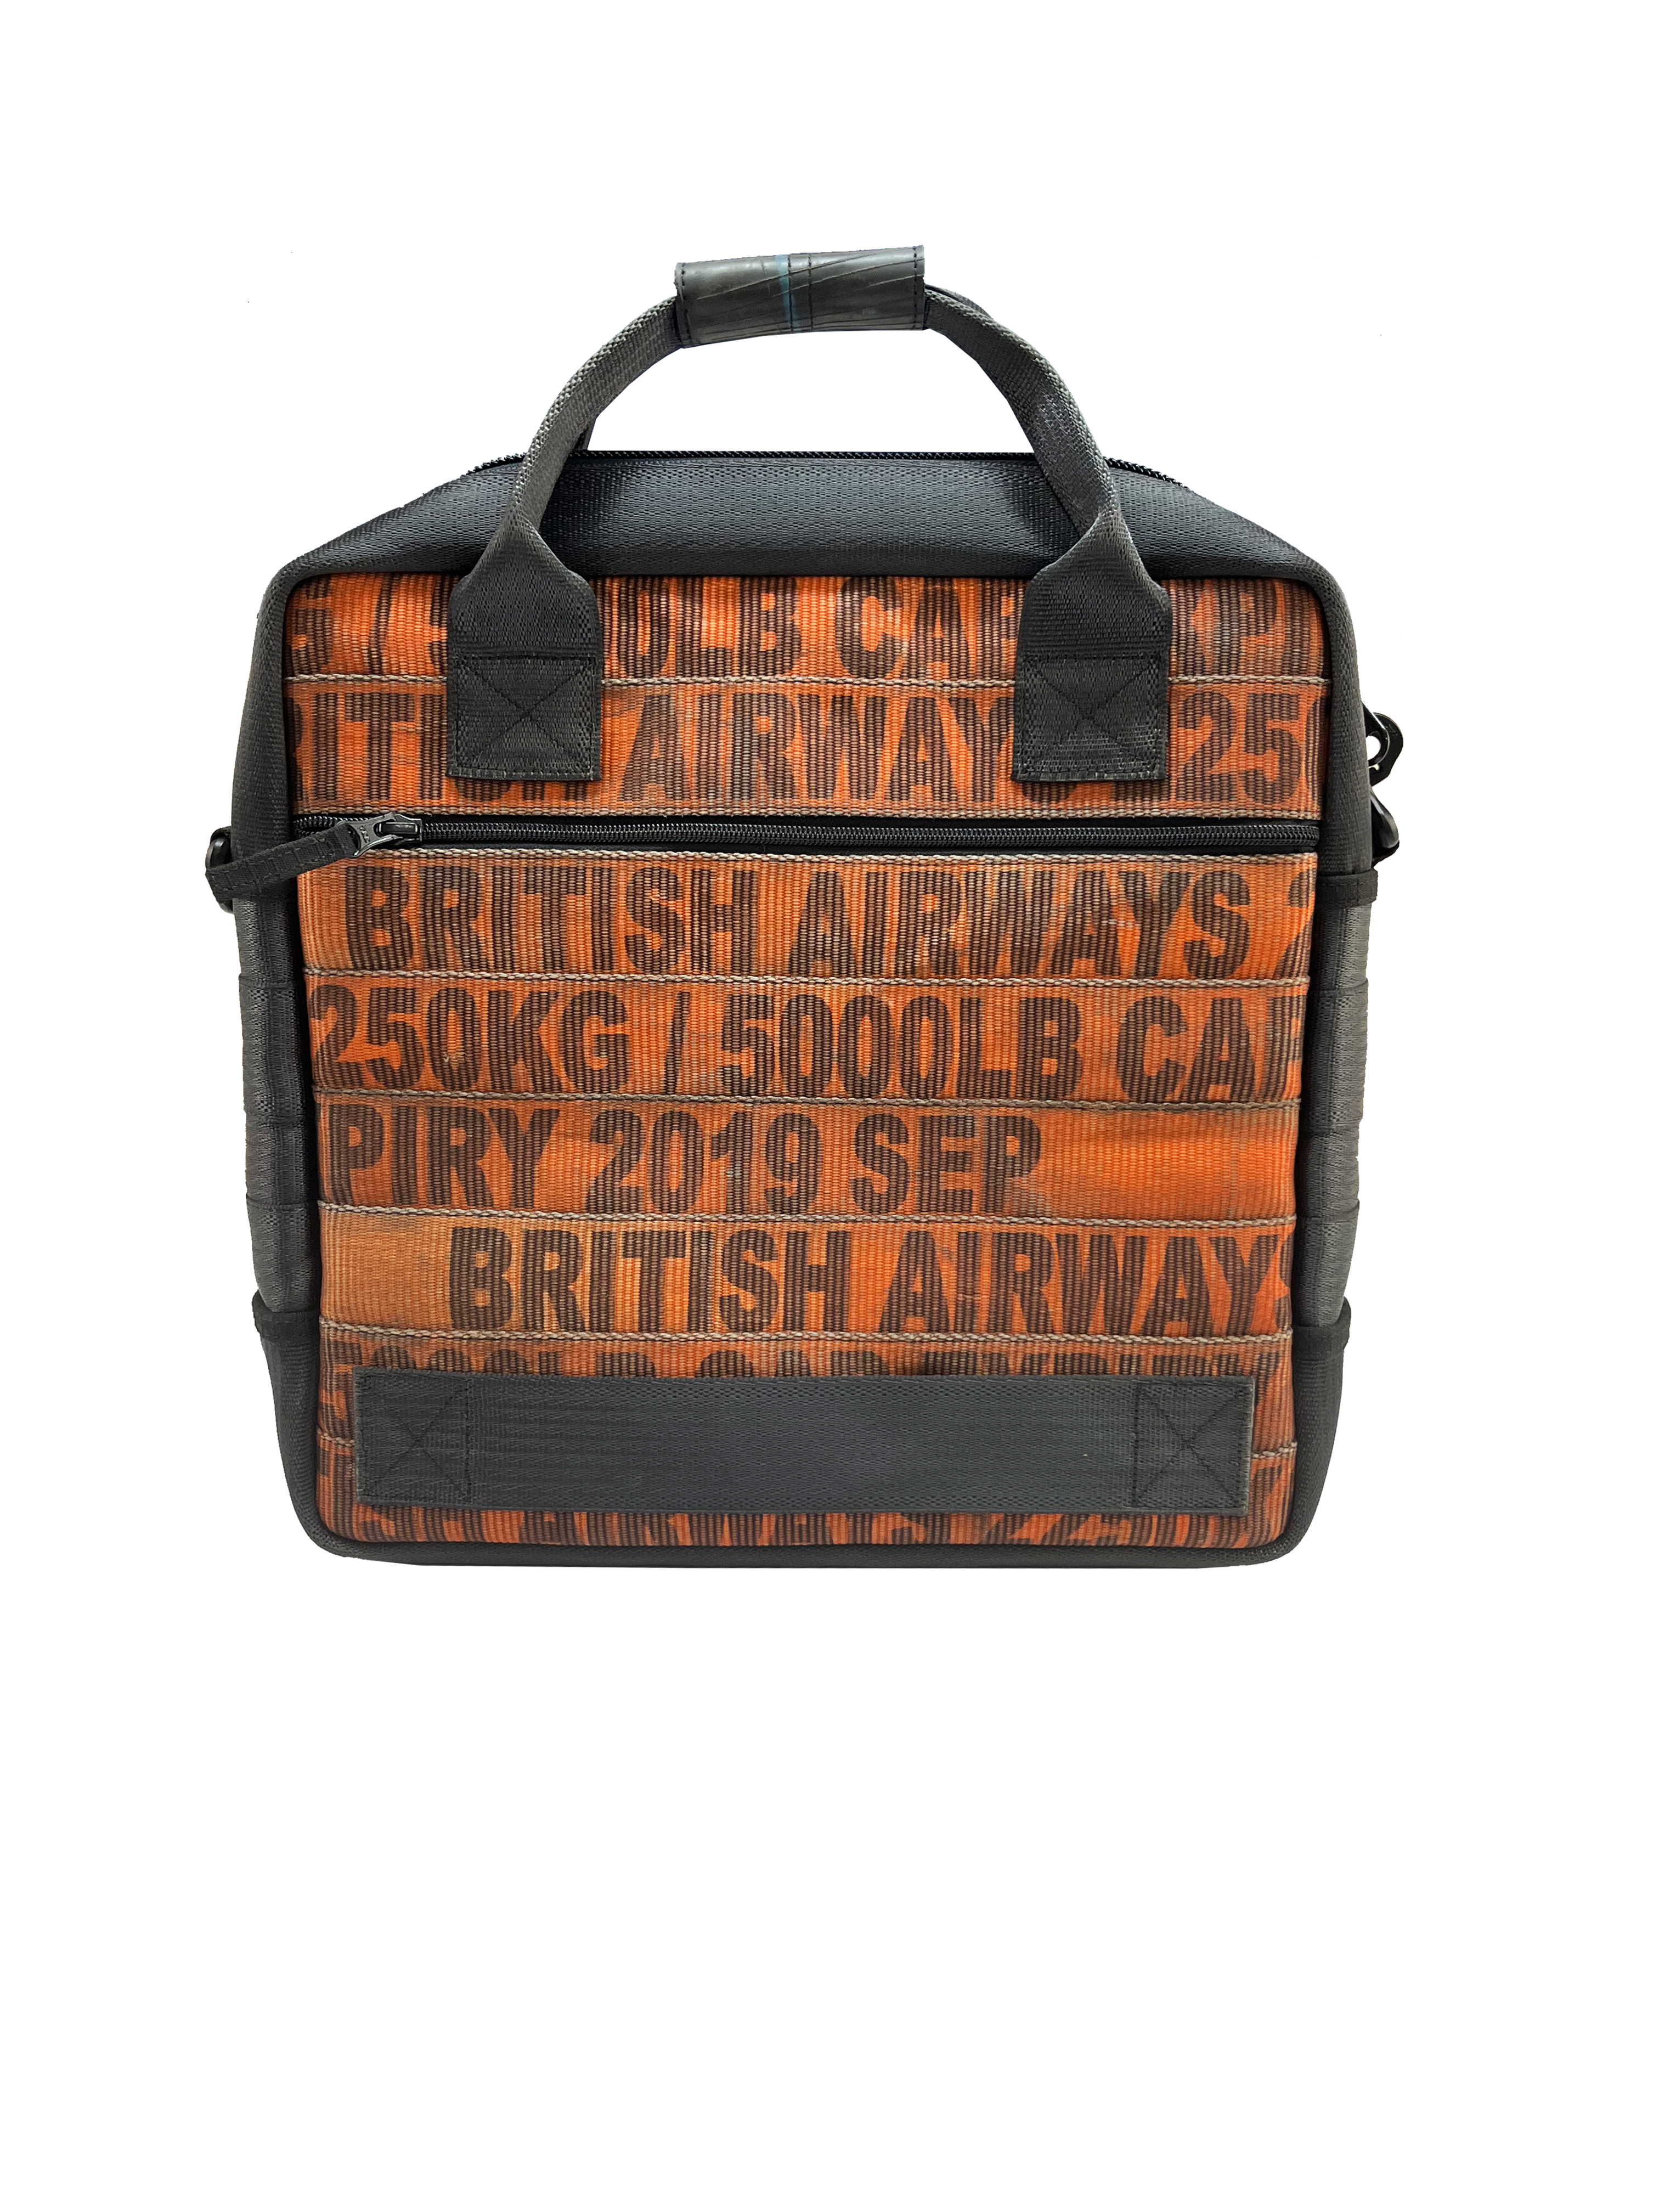 Airway Management Bag 21L X 12-1/2W X 8-1/2H Inch Green